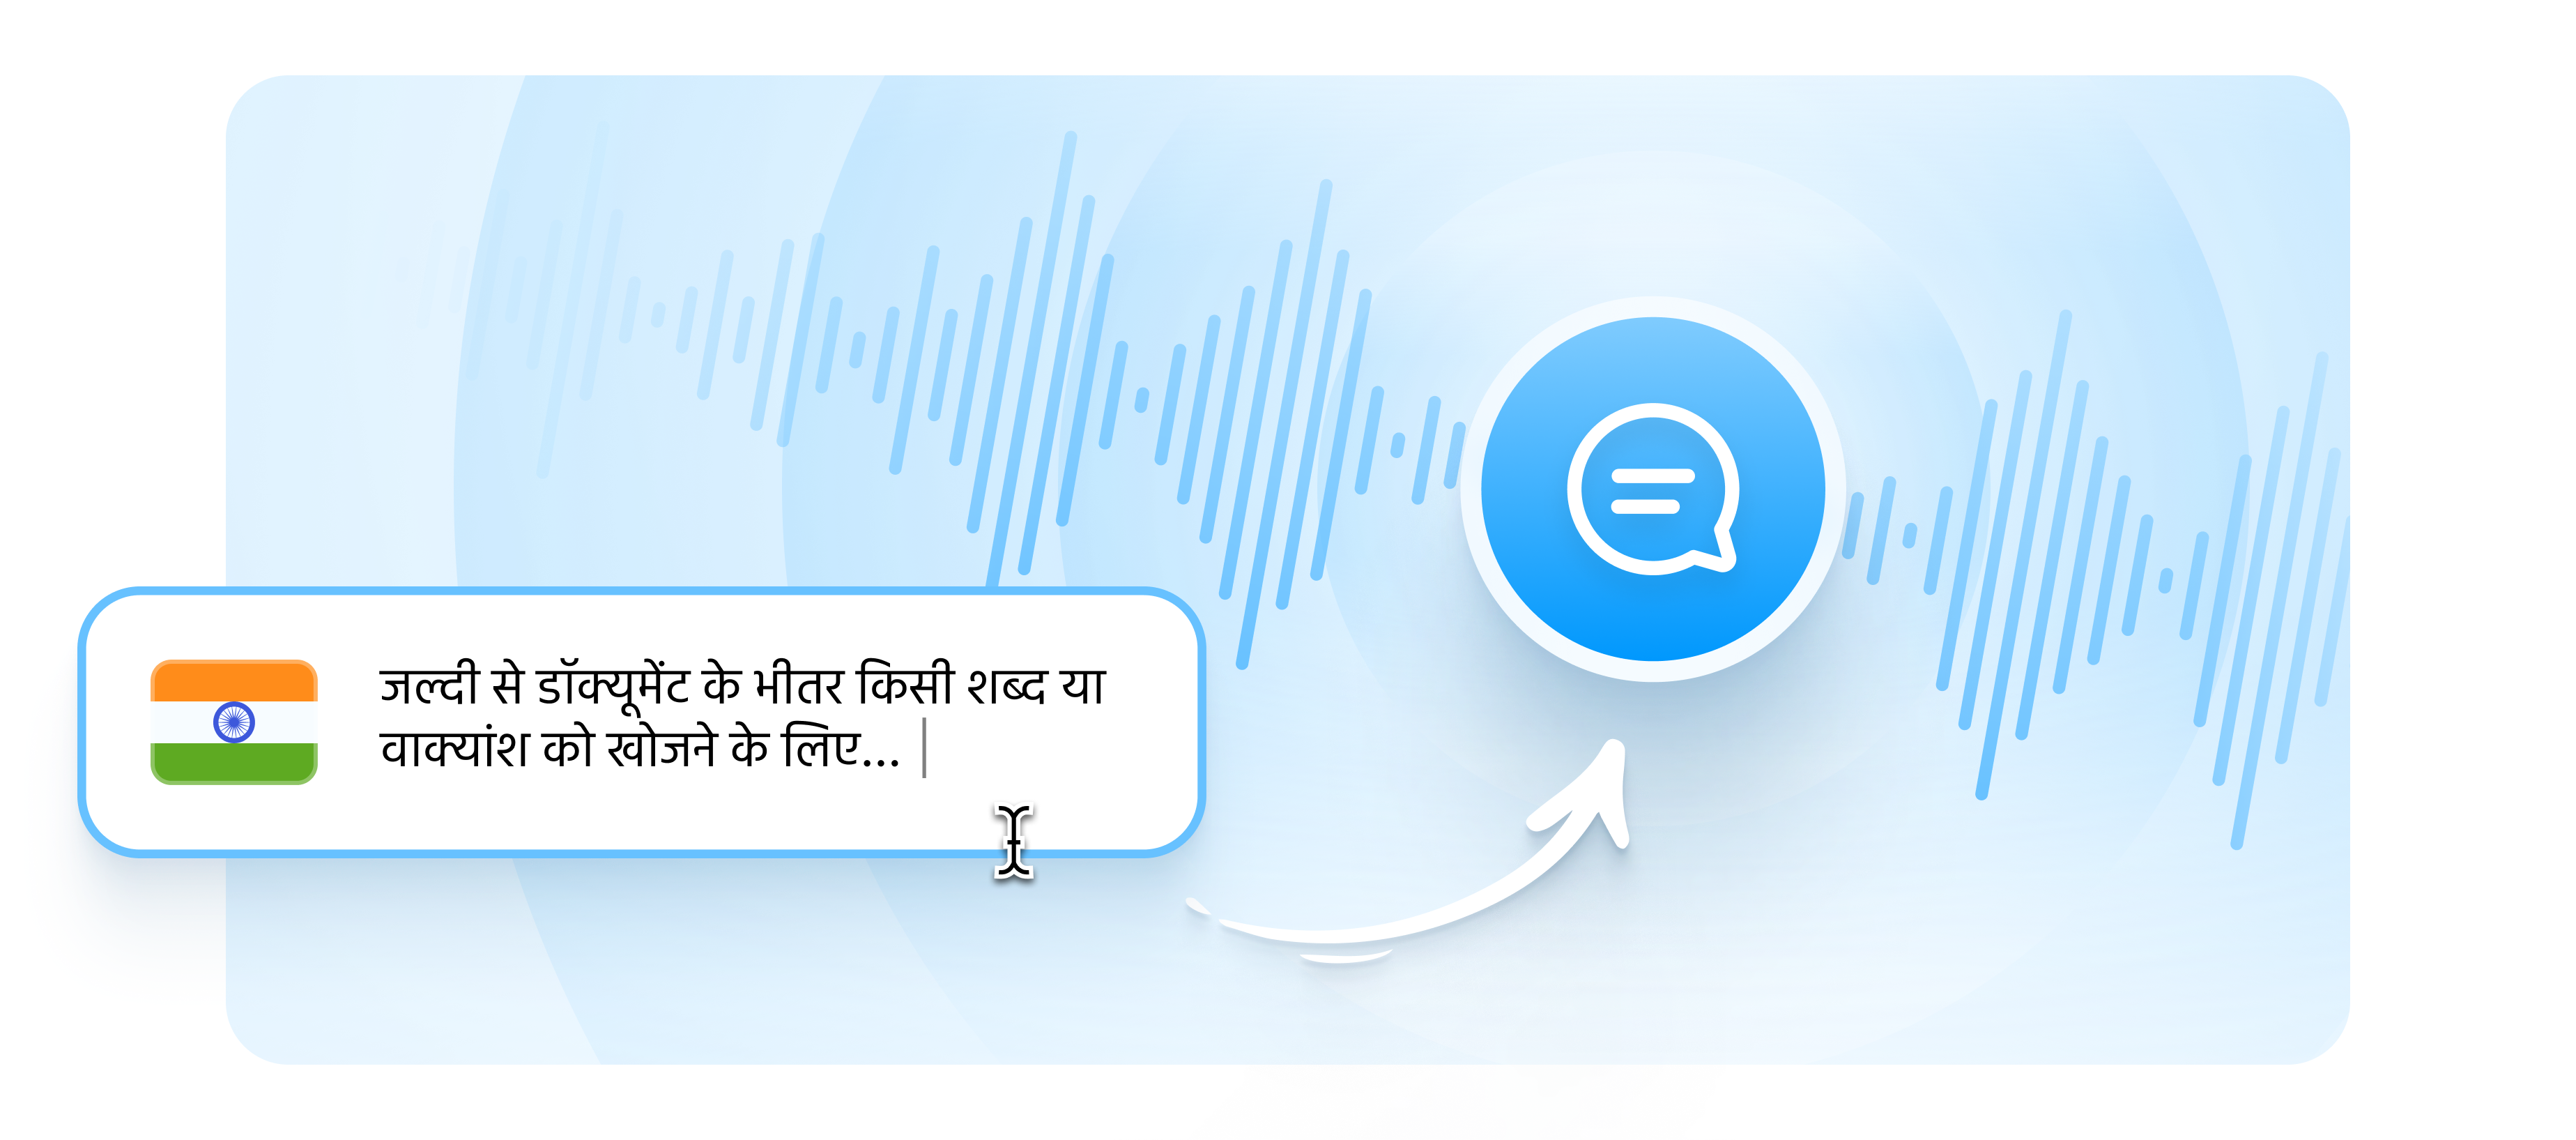 hindi text to speech software indian voice offline